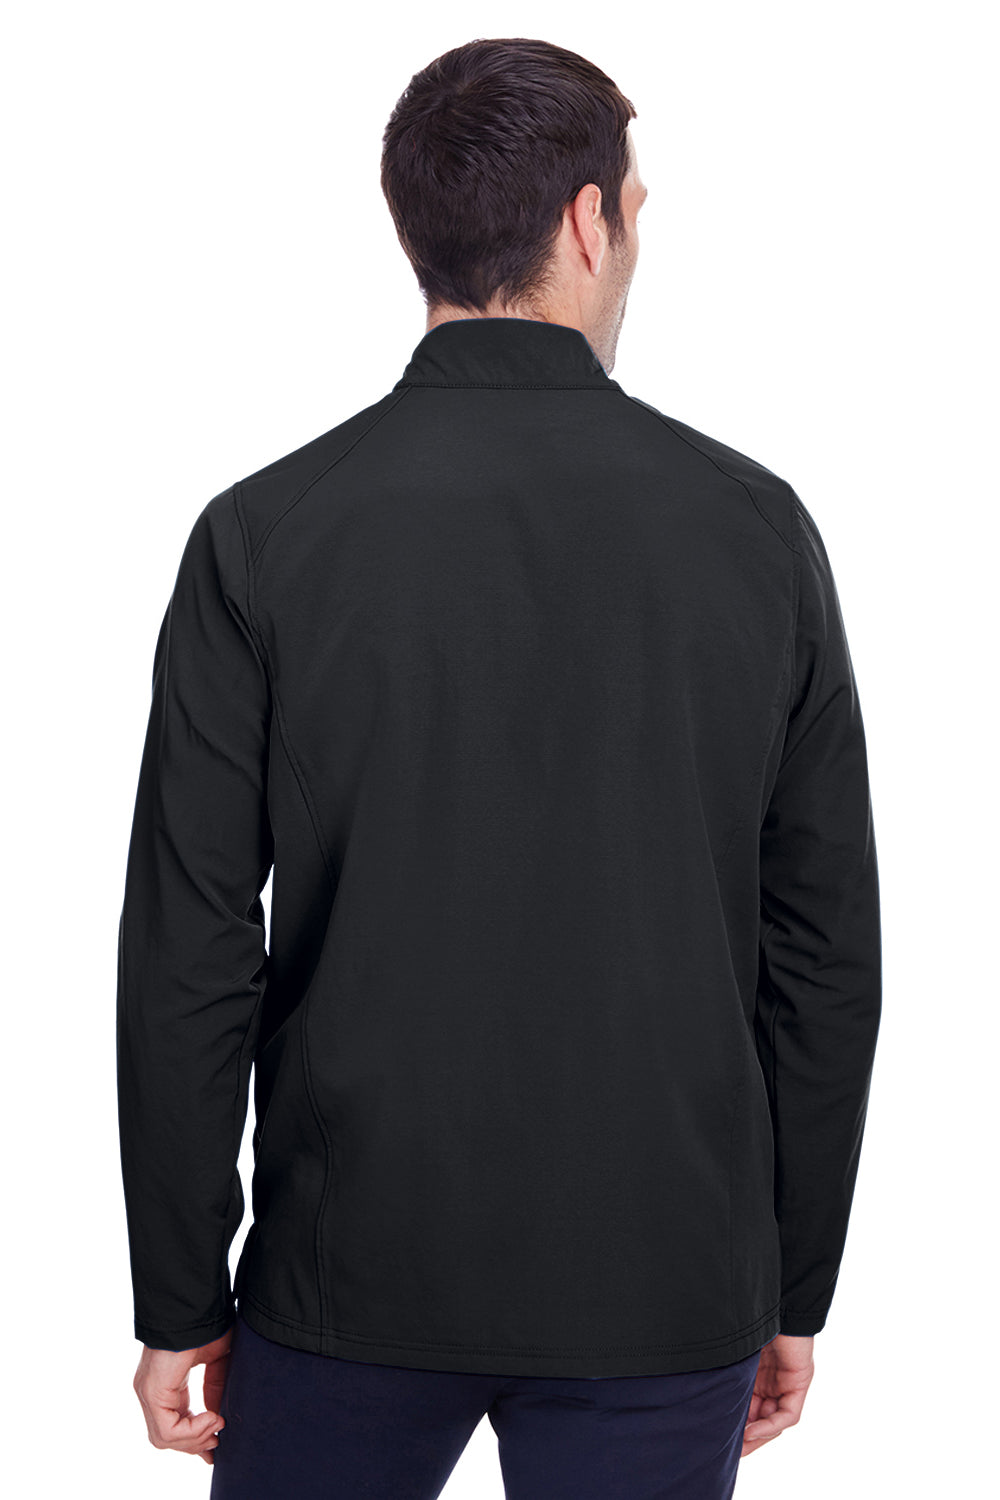 North End NE401 Mens Quest Performance Moisture Wicking 1/4 Zip Sweatshirt Black/Carbon Grey Back